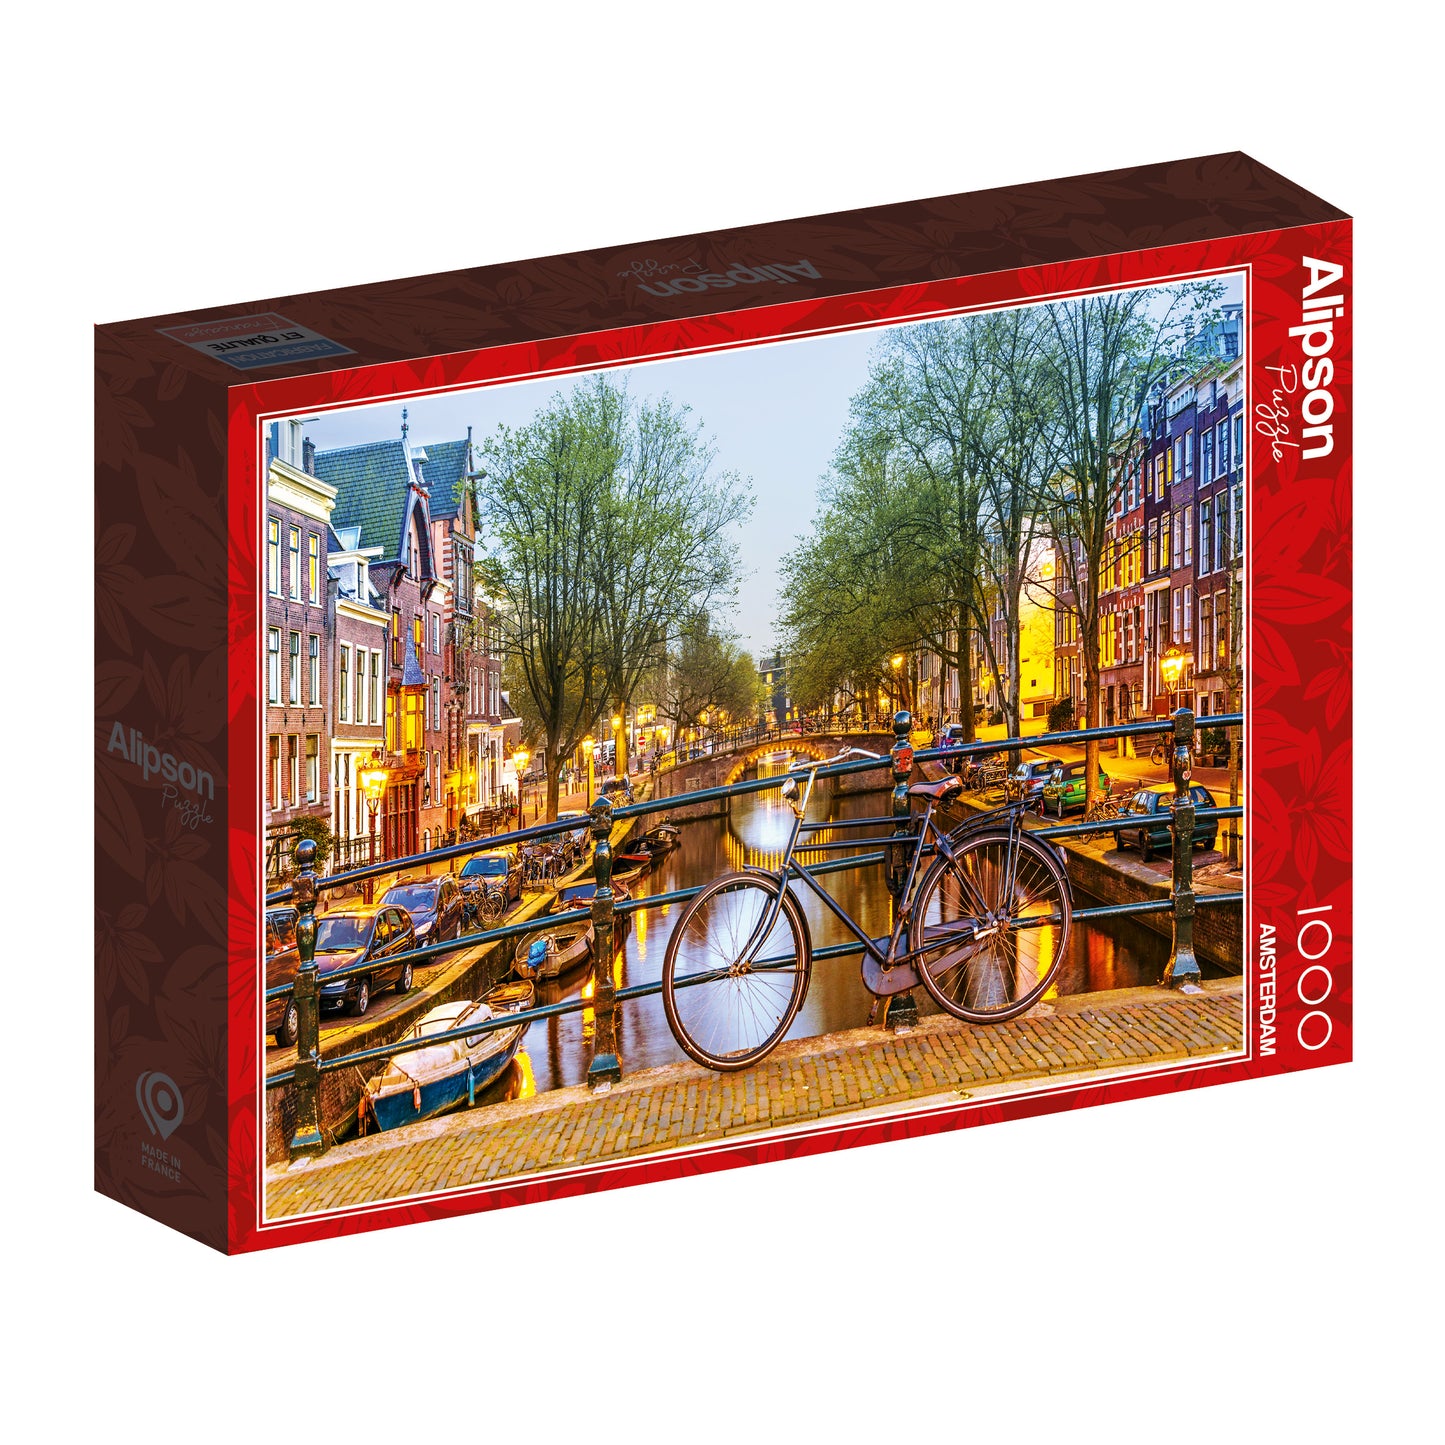 Alipson - Amsterdam - 1000 Piece Jigsaw Puzzle